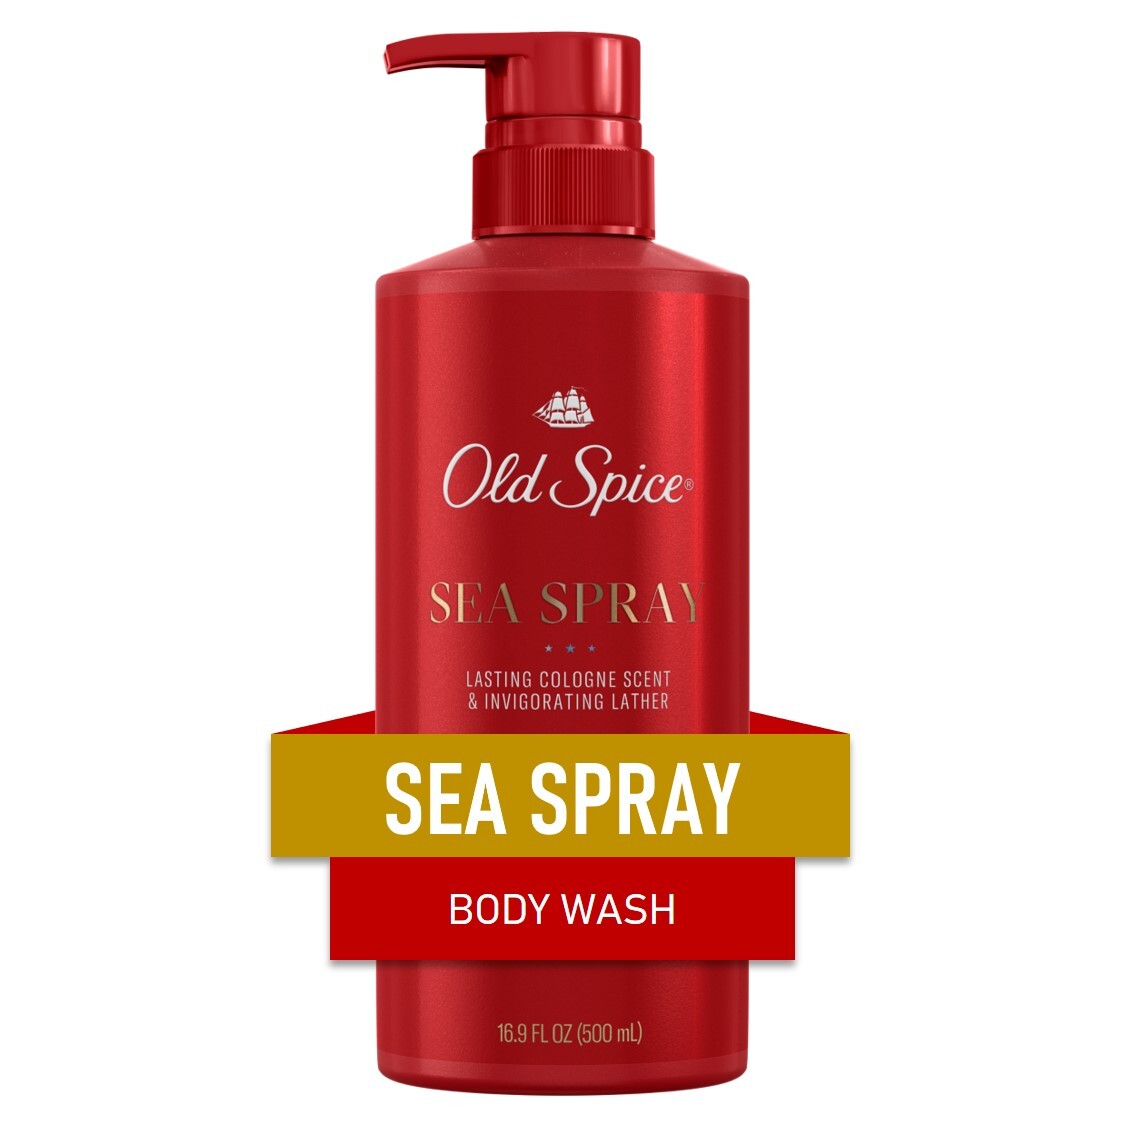 Old Spice Body Wash for Men, Sea Spray Cologne Scent, 16.9 fl oz - image 1 of 6